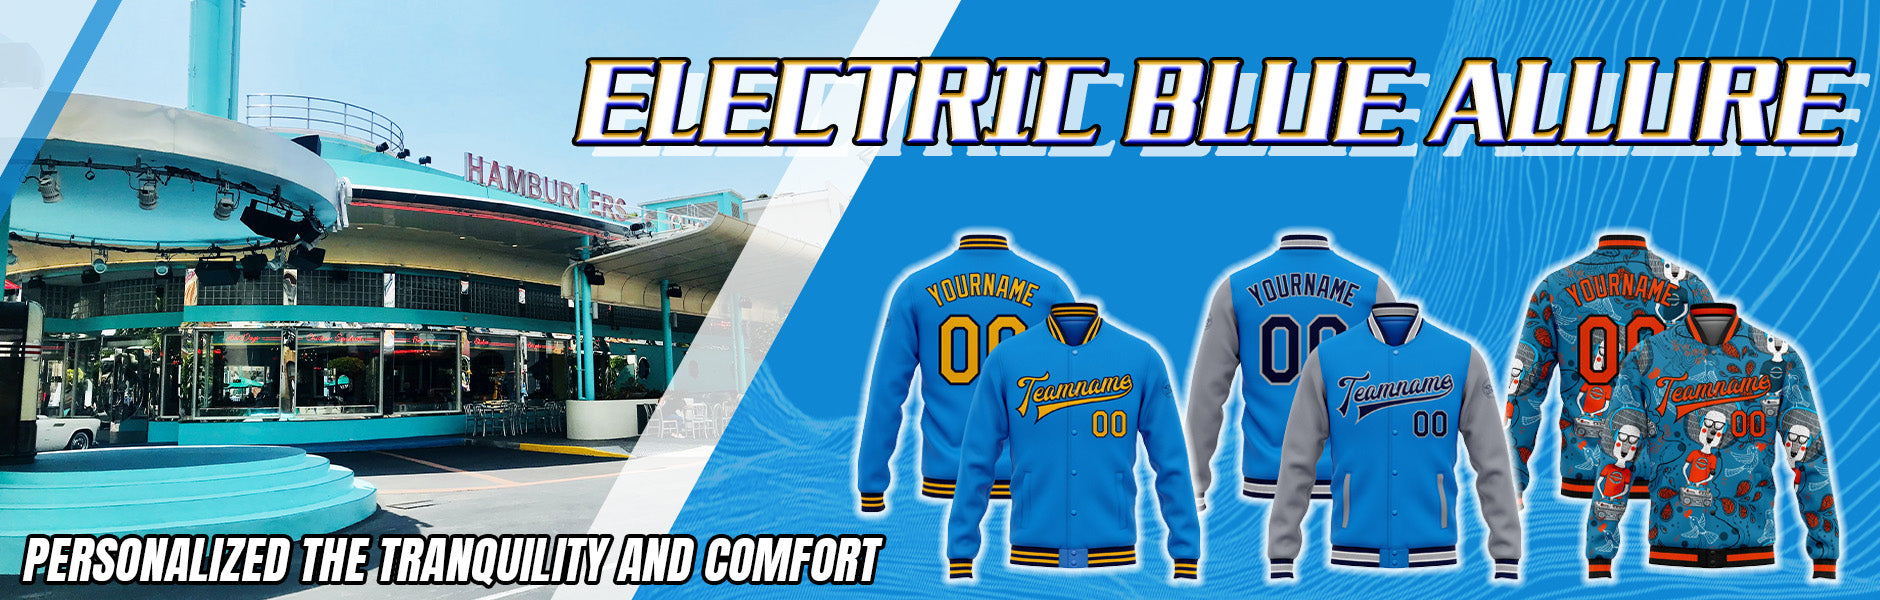 CUSTOM electric blue jacket